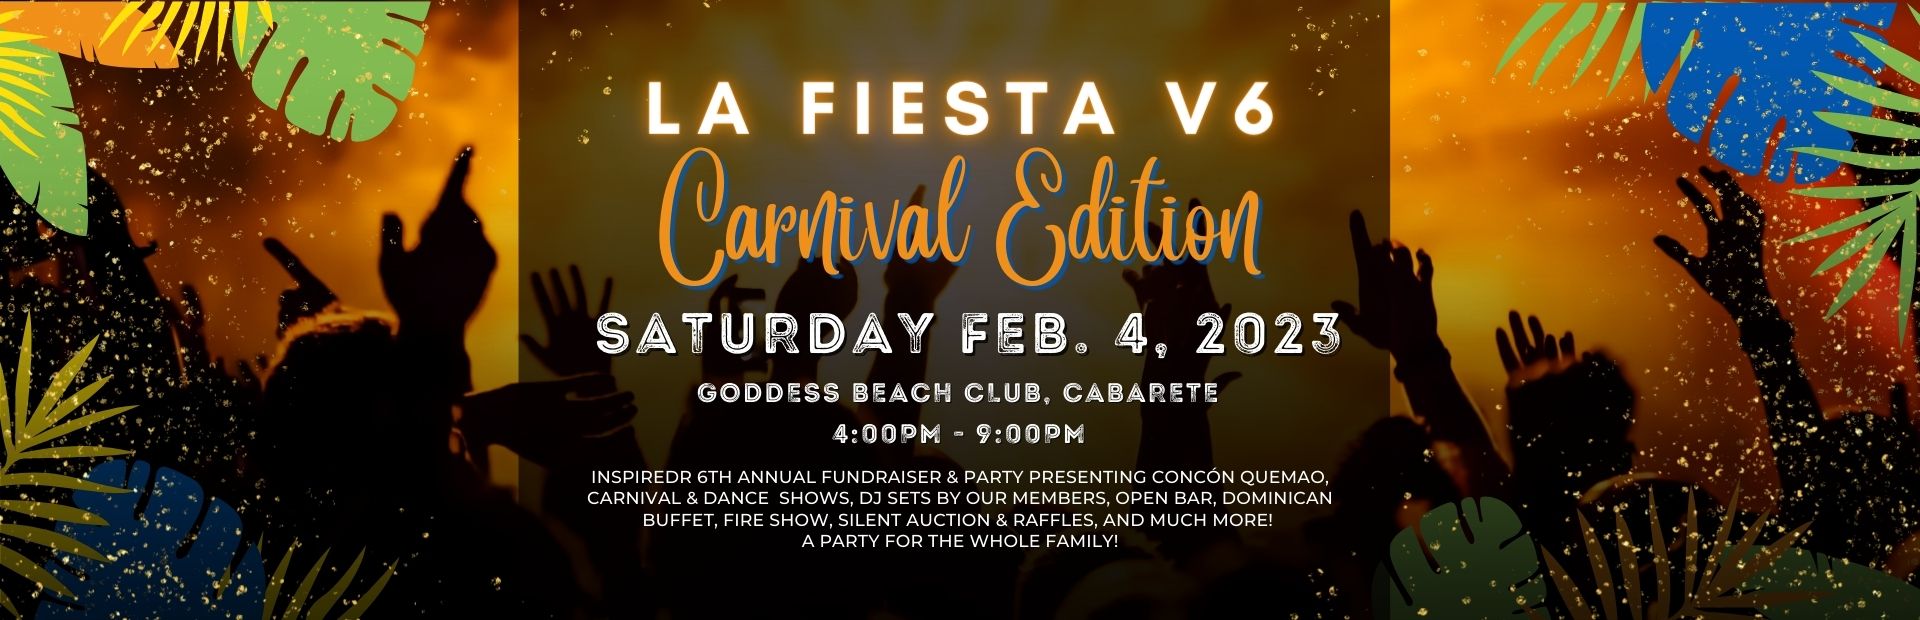 La Fiesta Carnaval